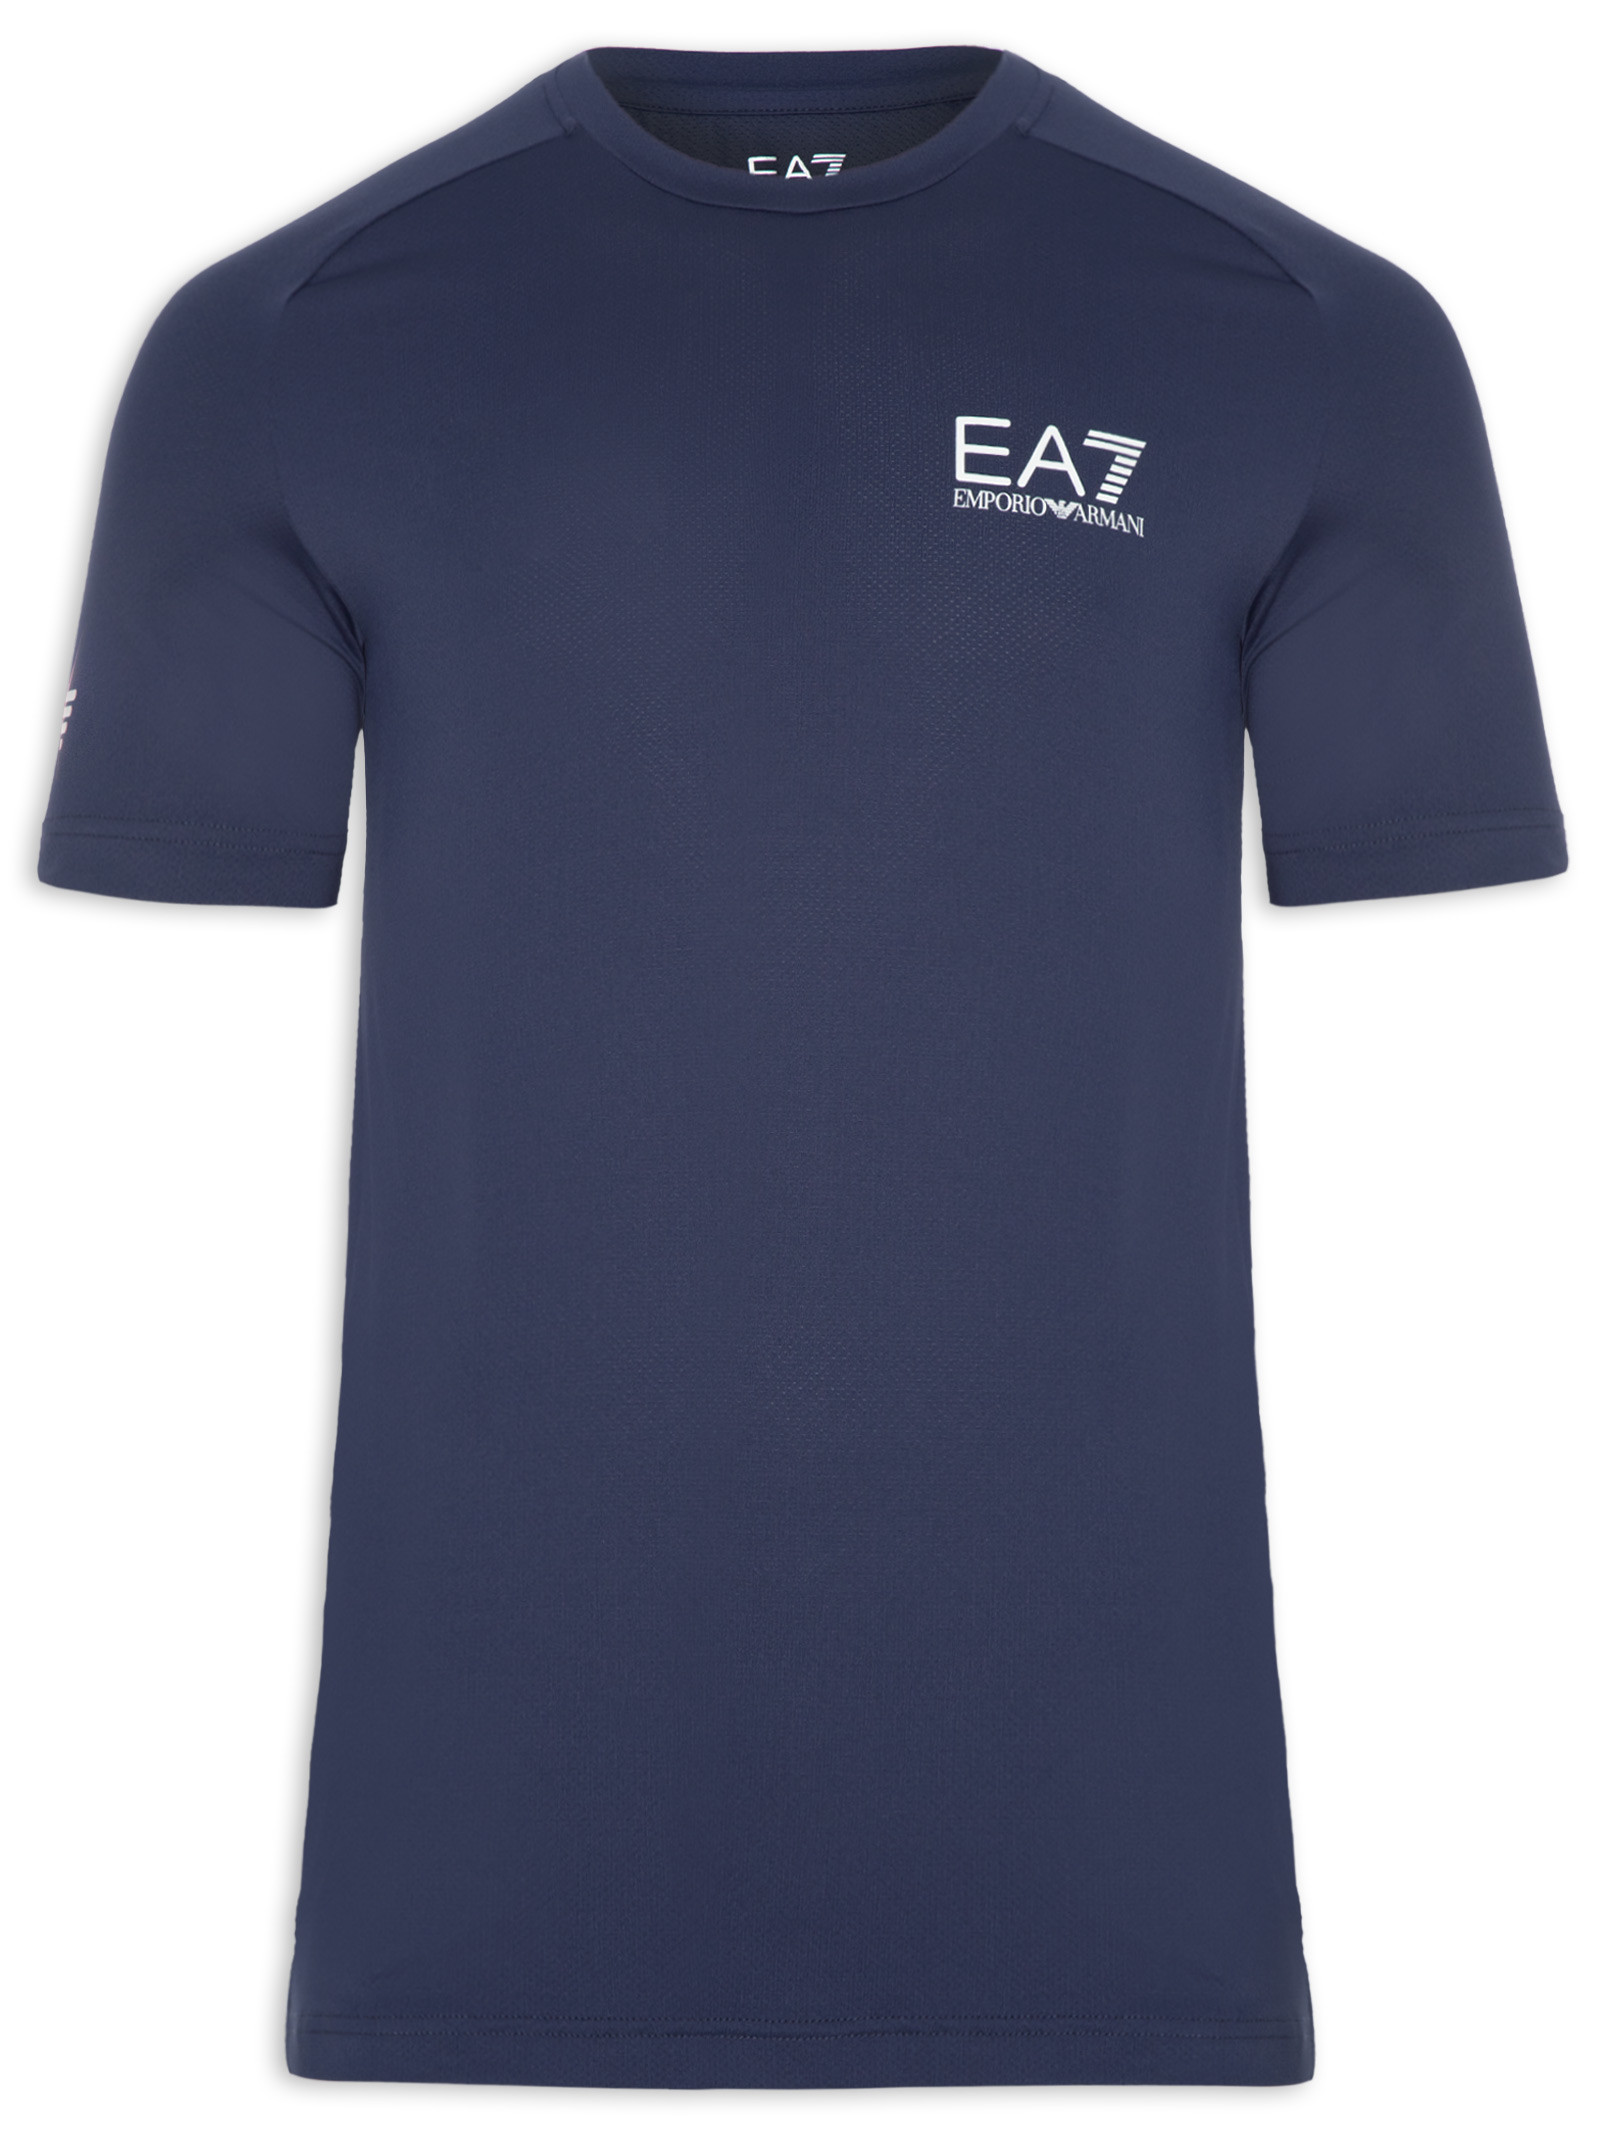 T-shirt Masculina Estampada - EA7 Emporio Armani - Azul - Shop2gether